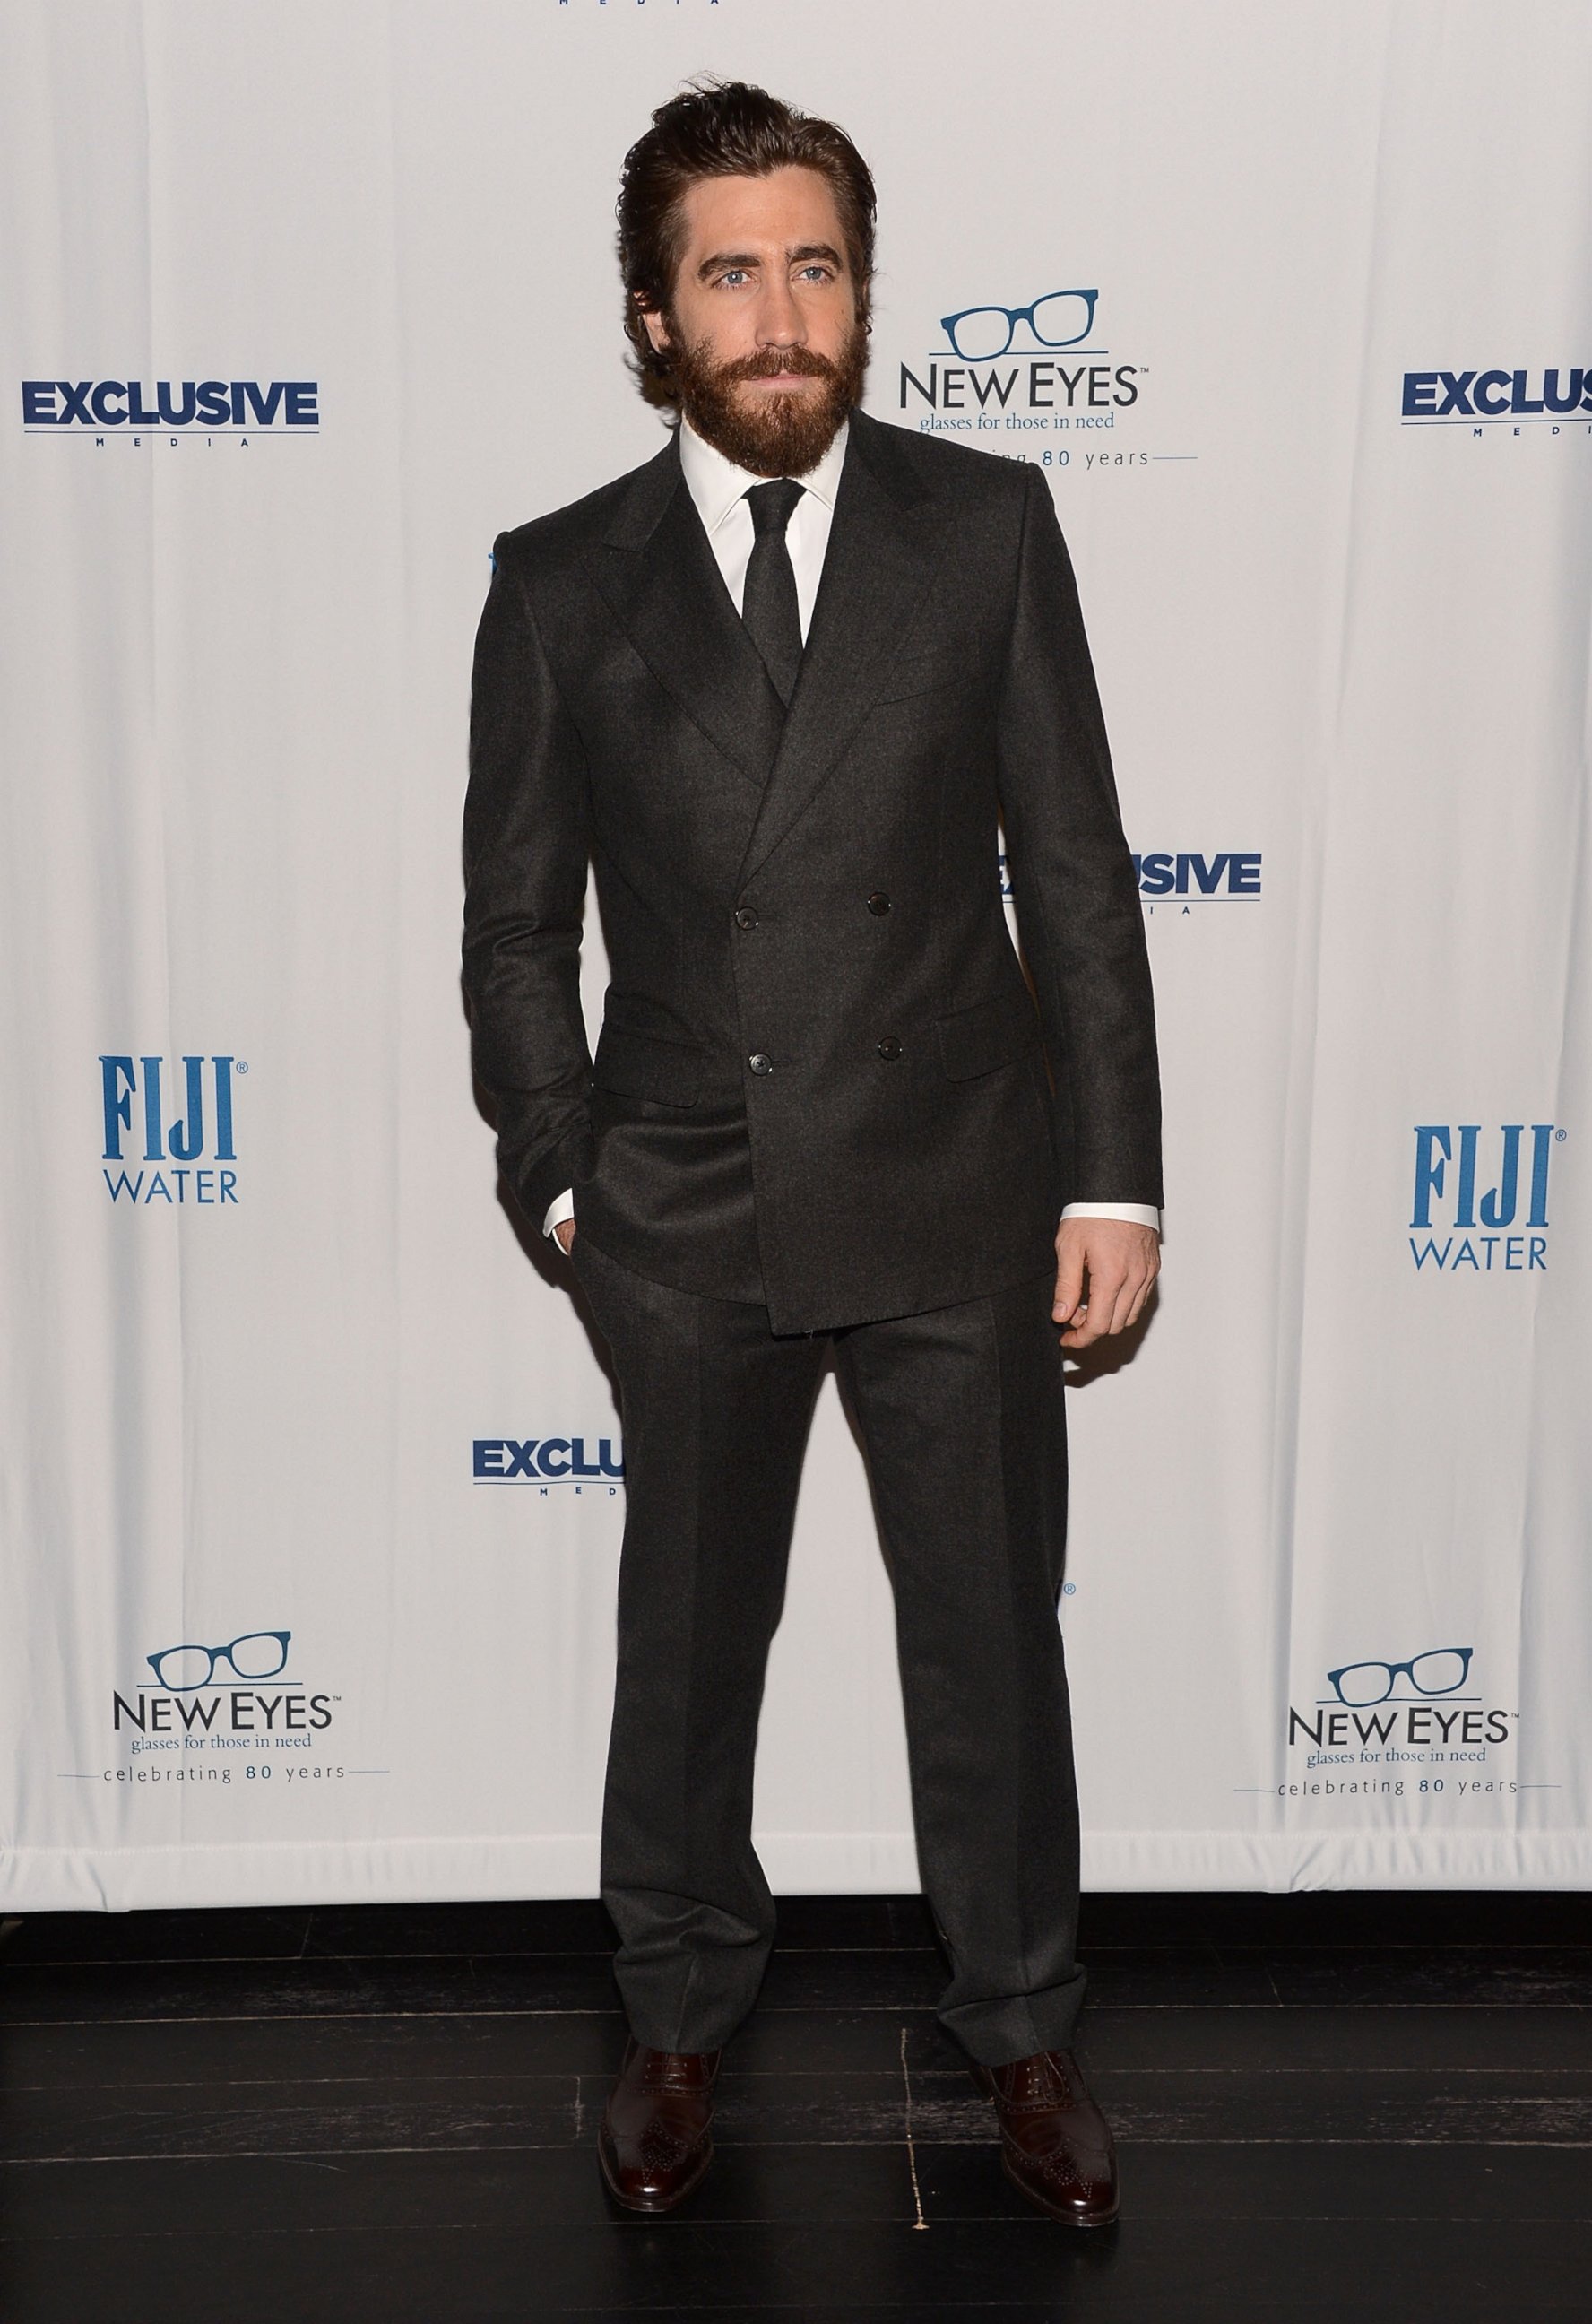 PHOTO:Actor Jake Gyllenhaal on November 19, 2012 in New York City.  